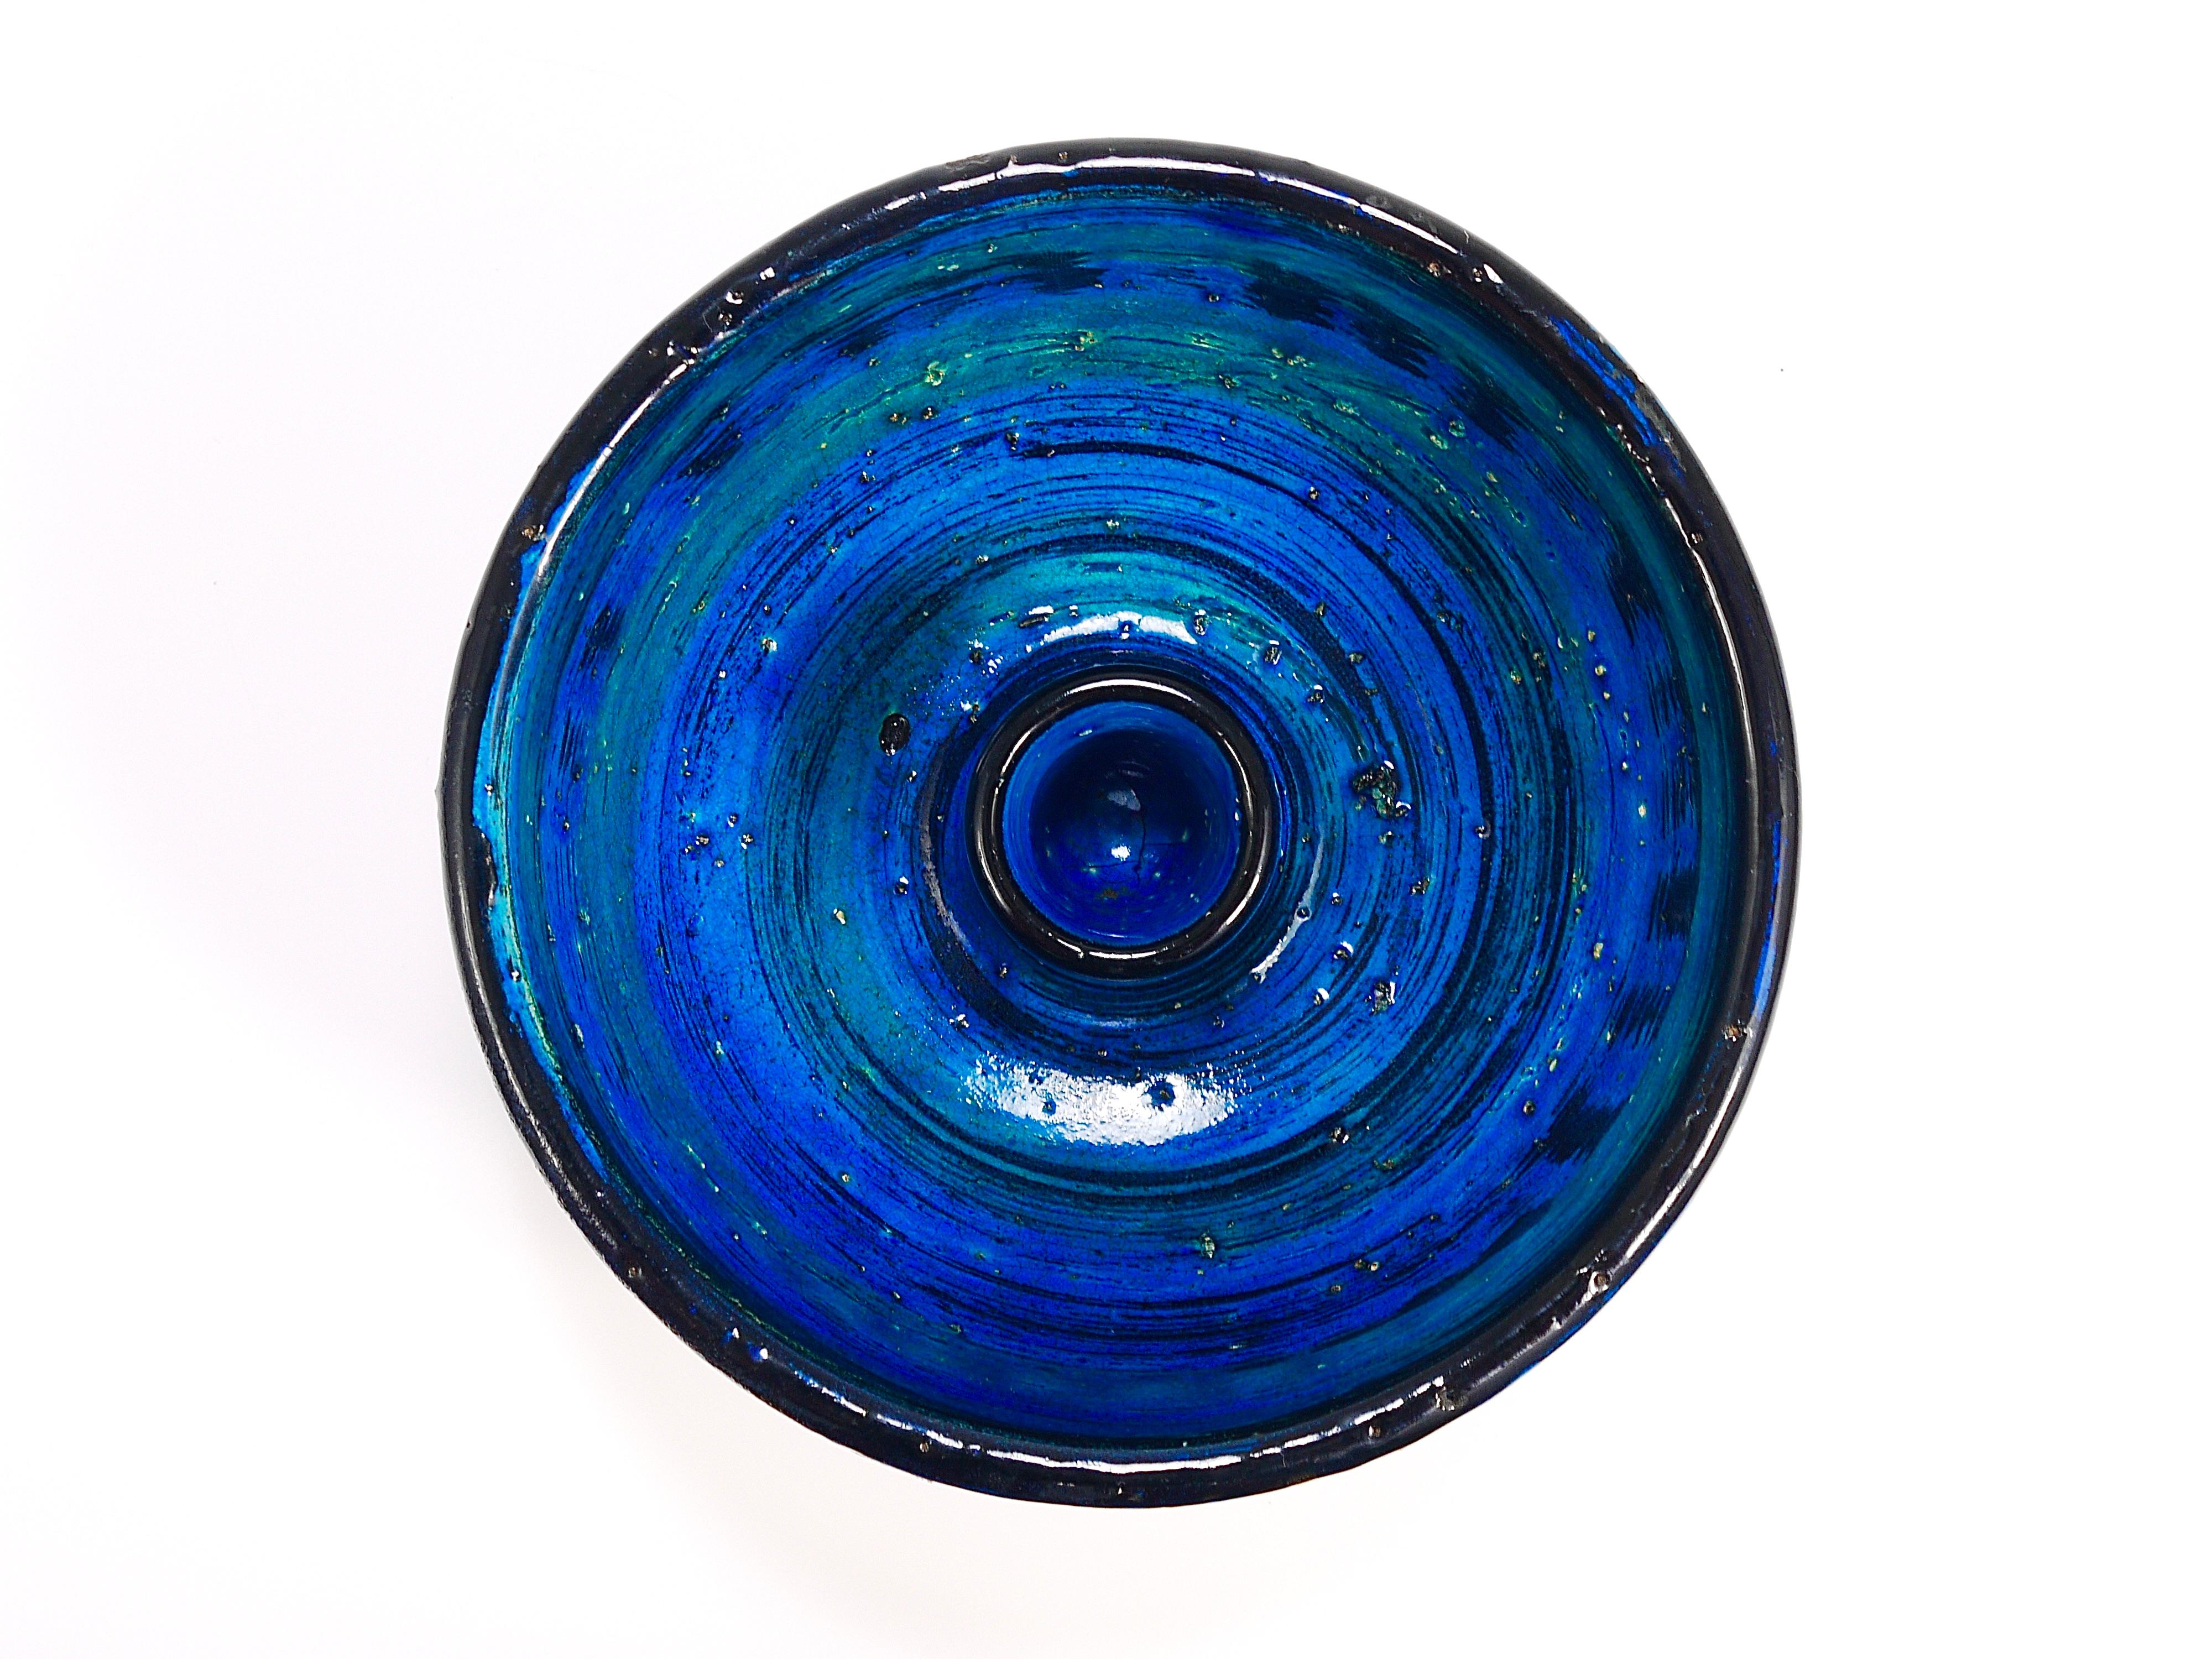 Aldo Londi Bitossi Rimini Blue Glazed Midcentury Candle Holder Bowl, 1950s For Sale 6